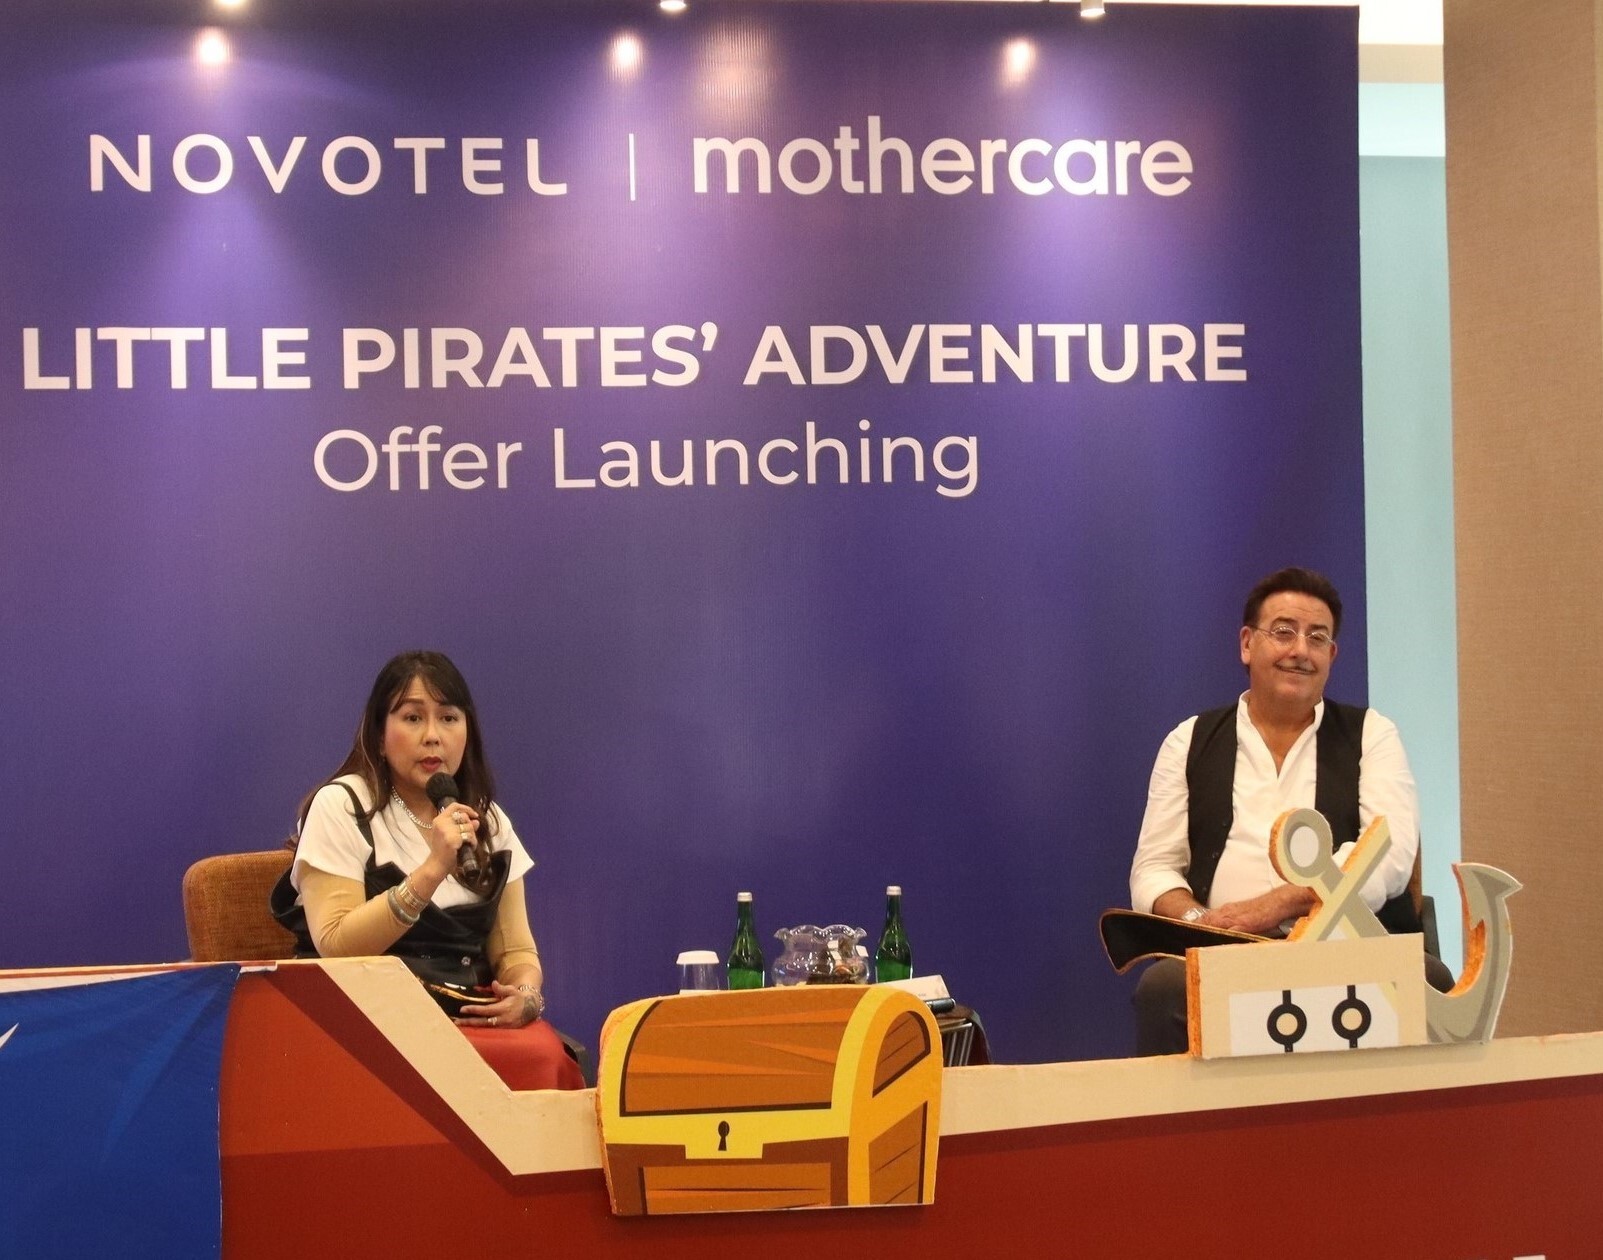 Offer launching_Novotel&Mothercare_Little Pirates'Adventure (1)-jpg